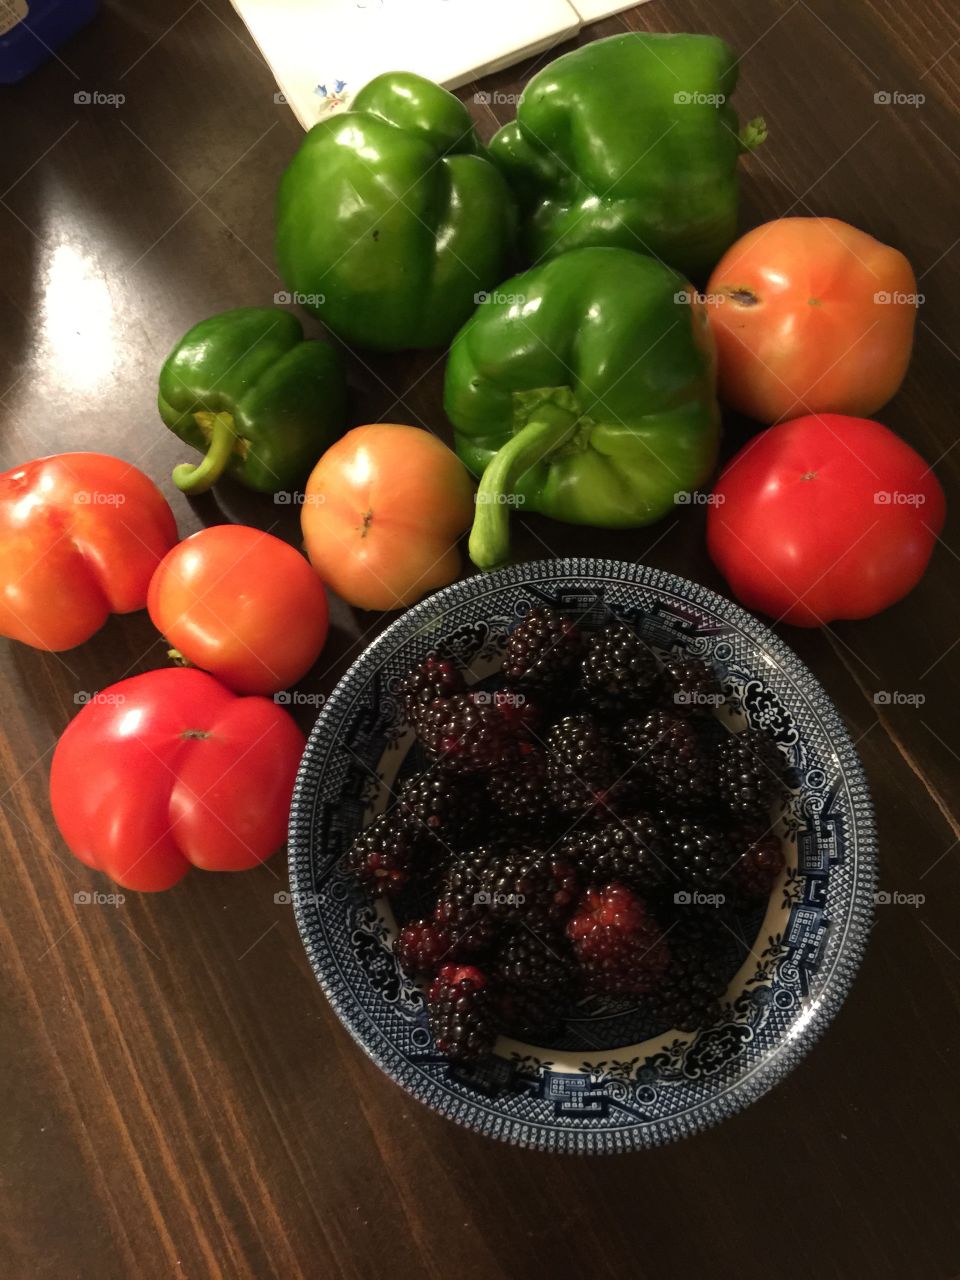 Tomatoes, peppers, blackberries fresh from the garden